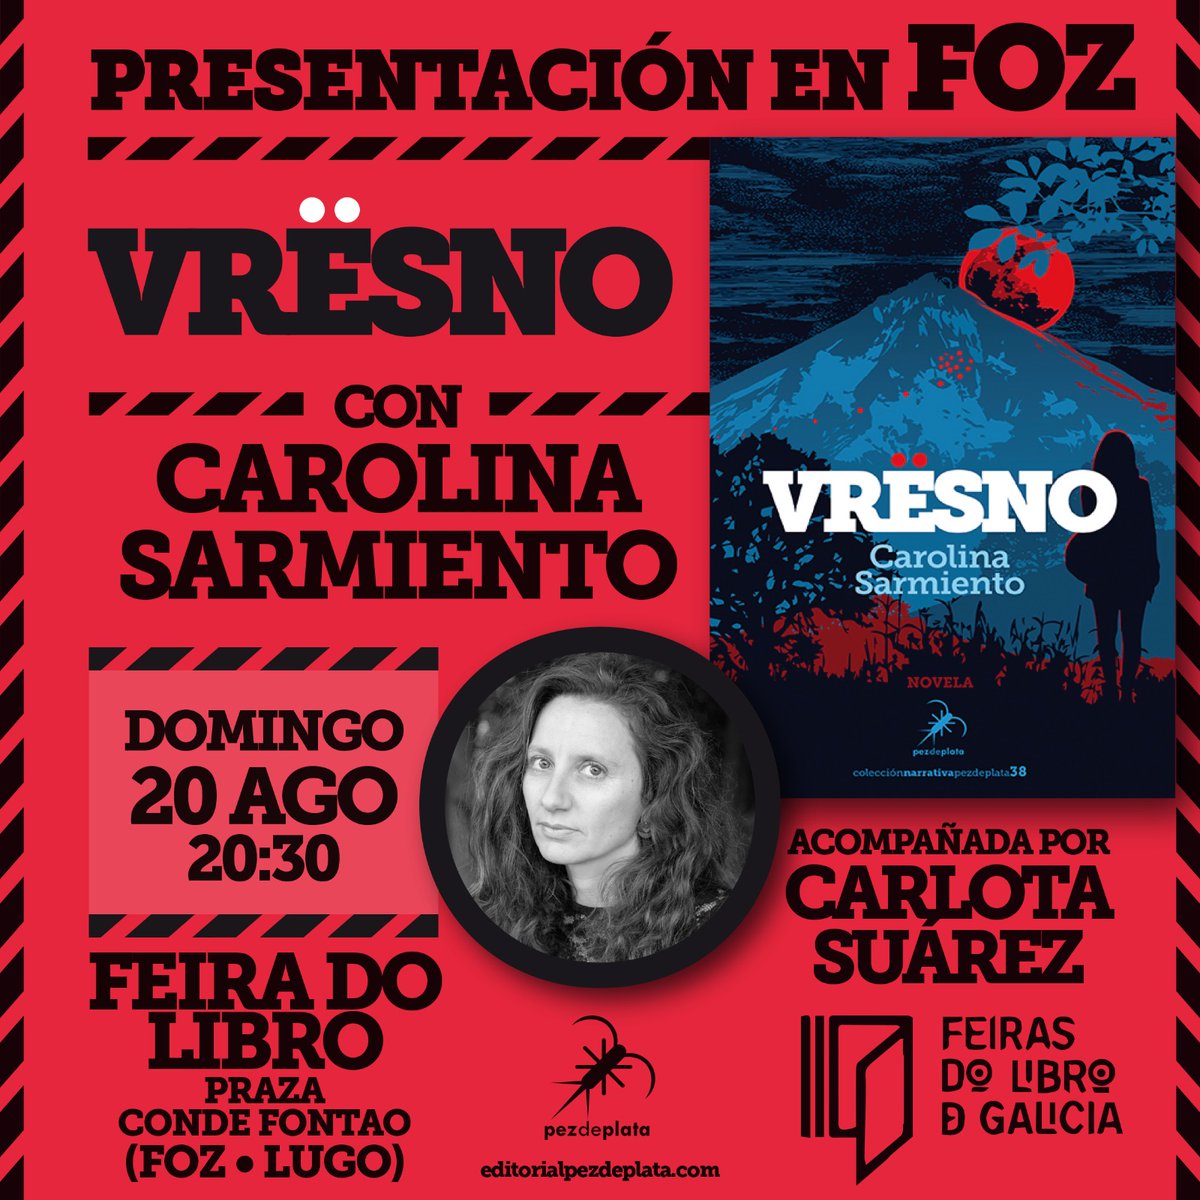 Este domingo Carolina Sarmiento en Foz.

#vrësno #carolinasarmiento #terror #feriadellibro #feiradolibro #foz #galicia #booksforsummer #librosparaelverano #devoralibros #pezdeplata